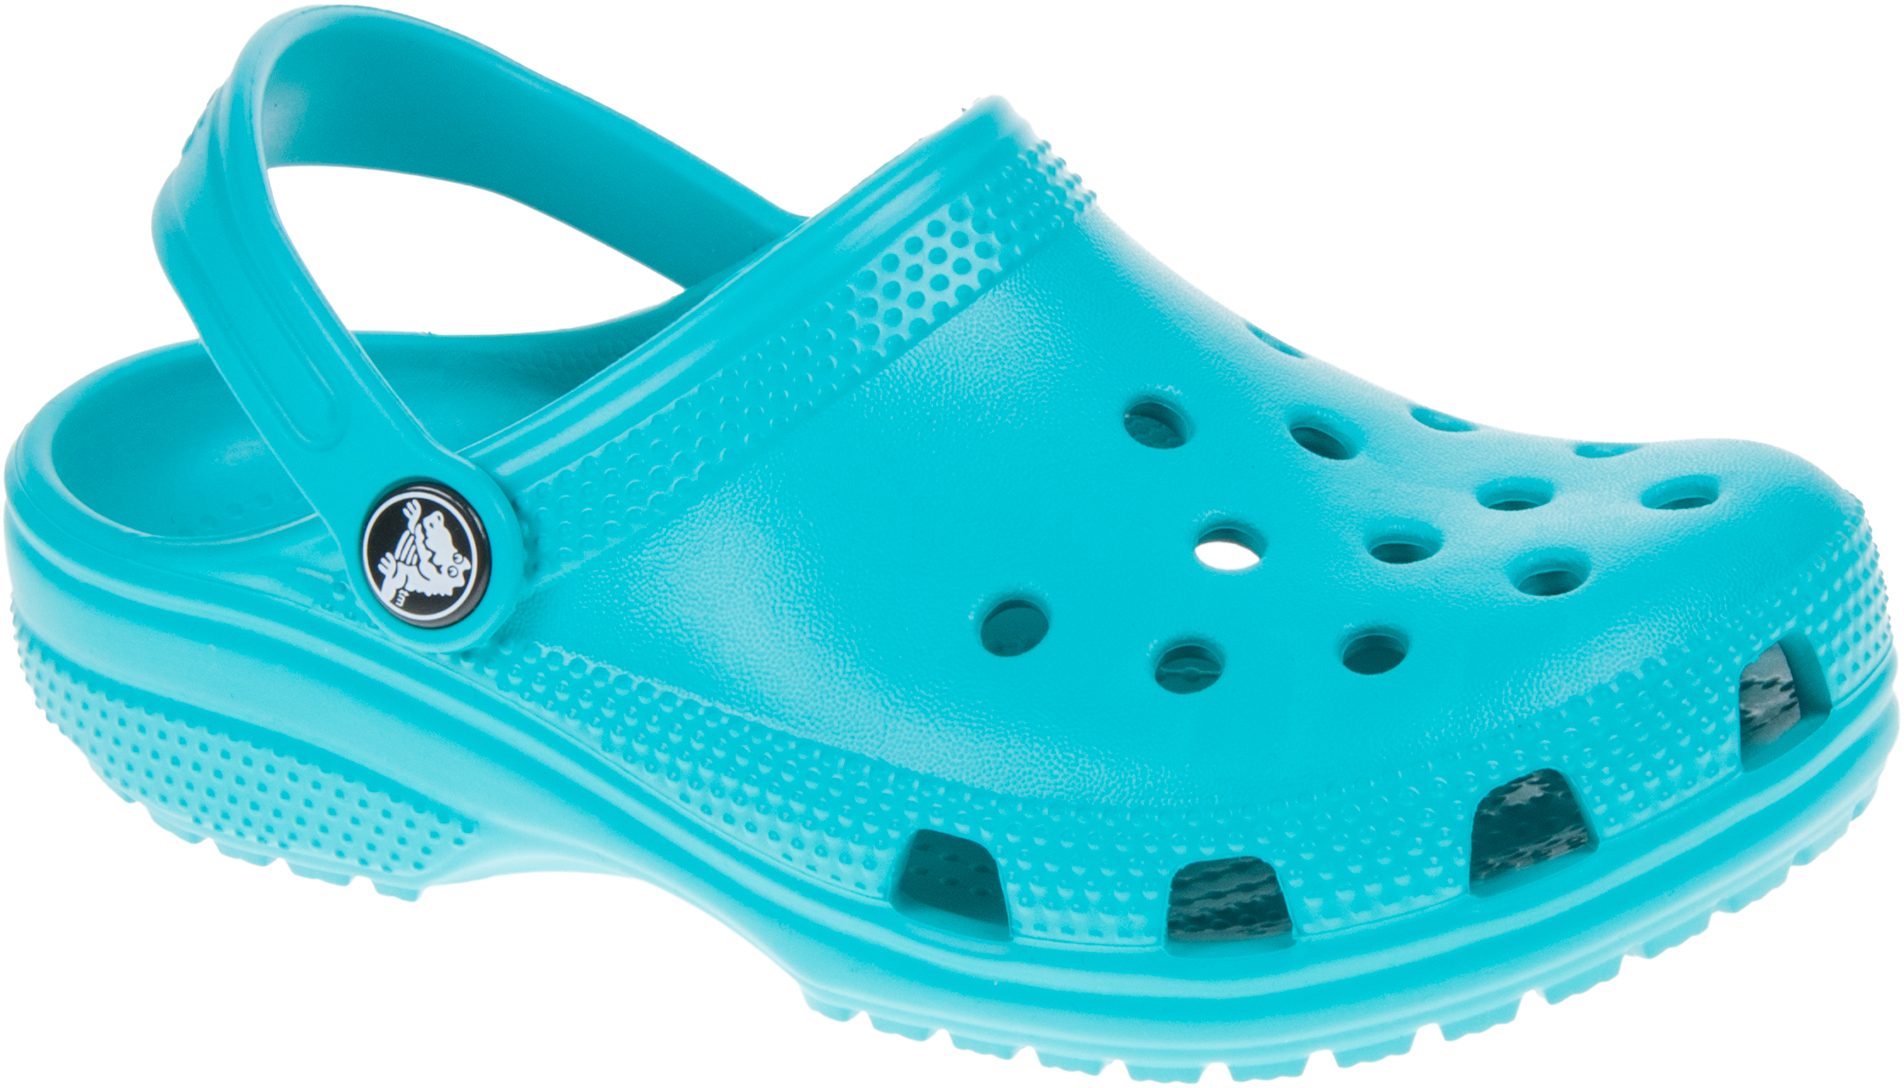 Crocs Kids Classic Clog Tropical Teal 204536 3N9 - Boys Shoes ...